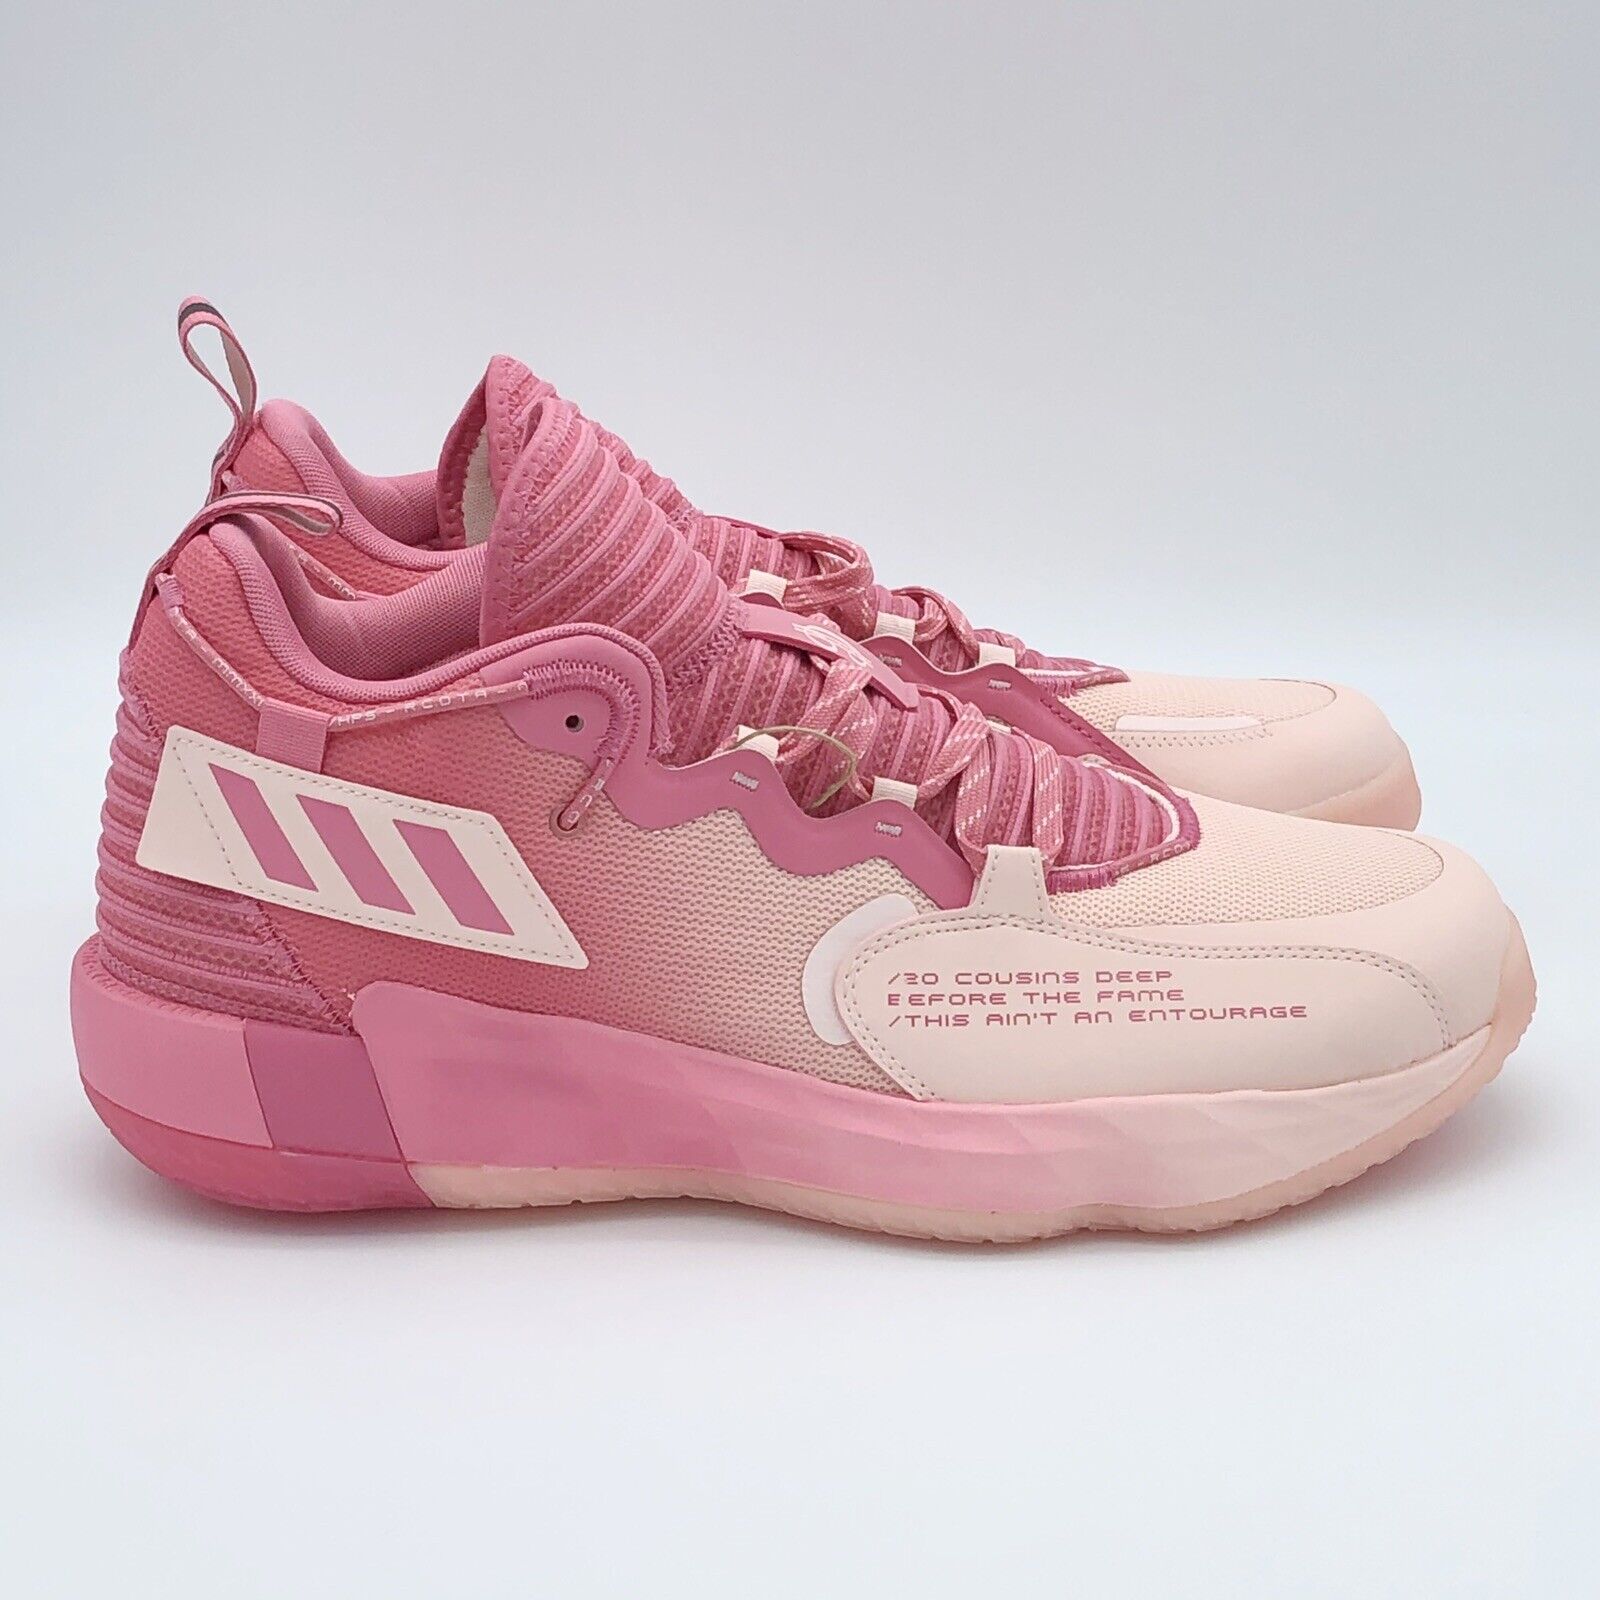 Adidas Dame 7 Extply GCA Rose Tone Icey Pink Mens Size 14.5 GV9877 READ